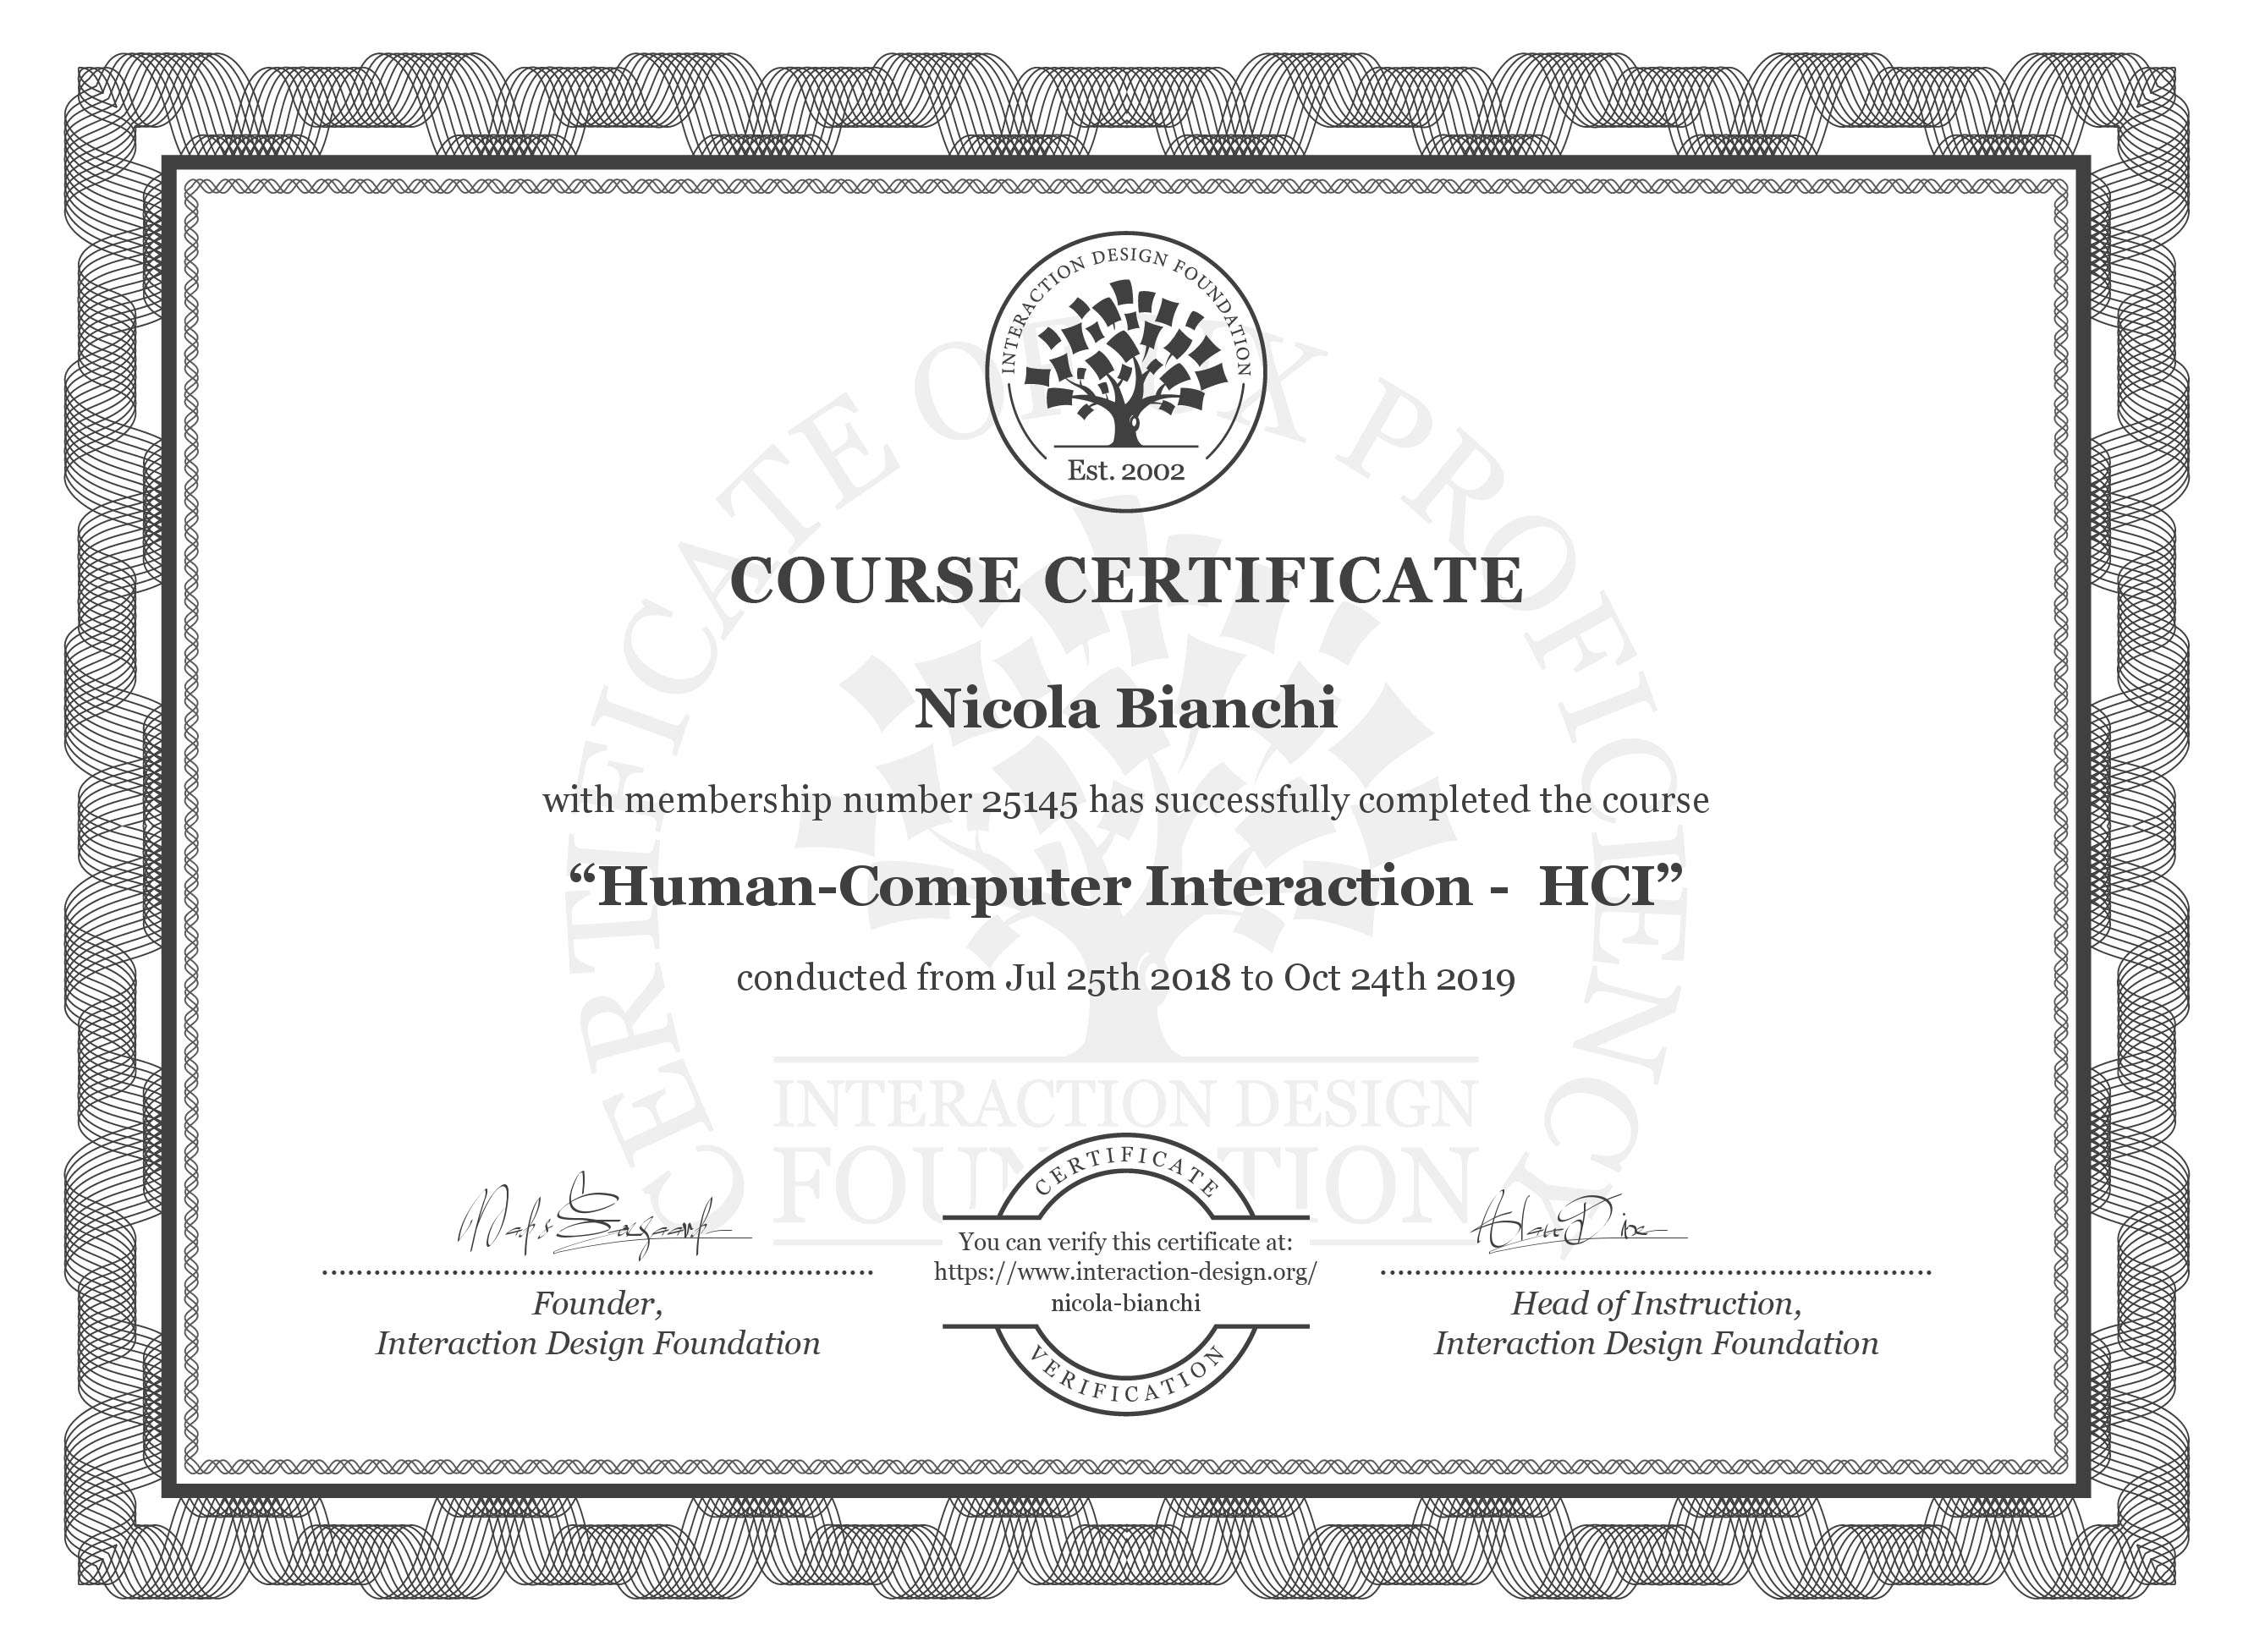 HUMAN-COMPUTER INTERACTION - HCI